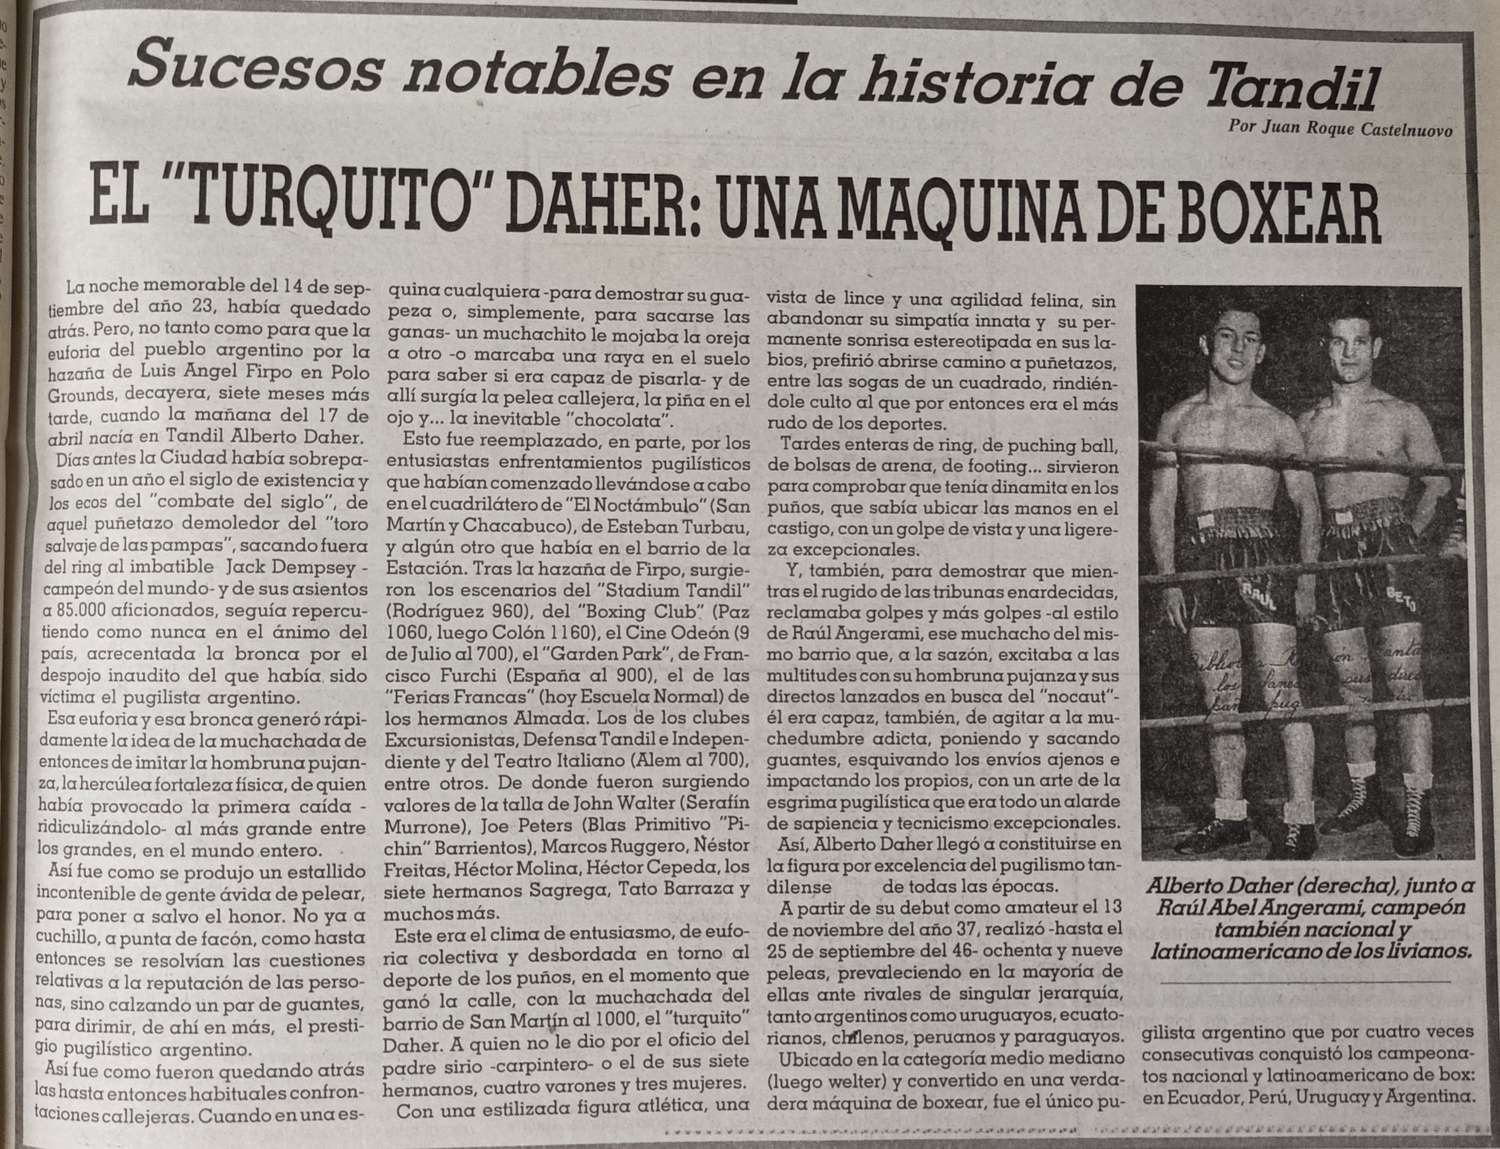 El "Turquito" Daher: una máquina de boxear